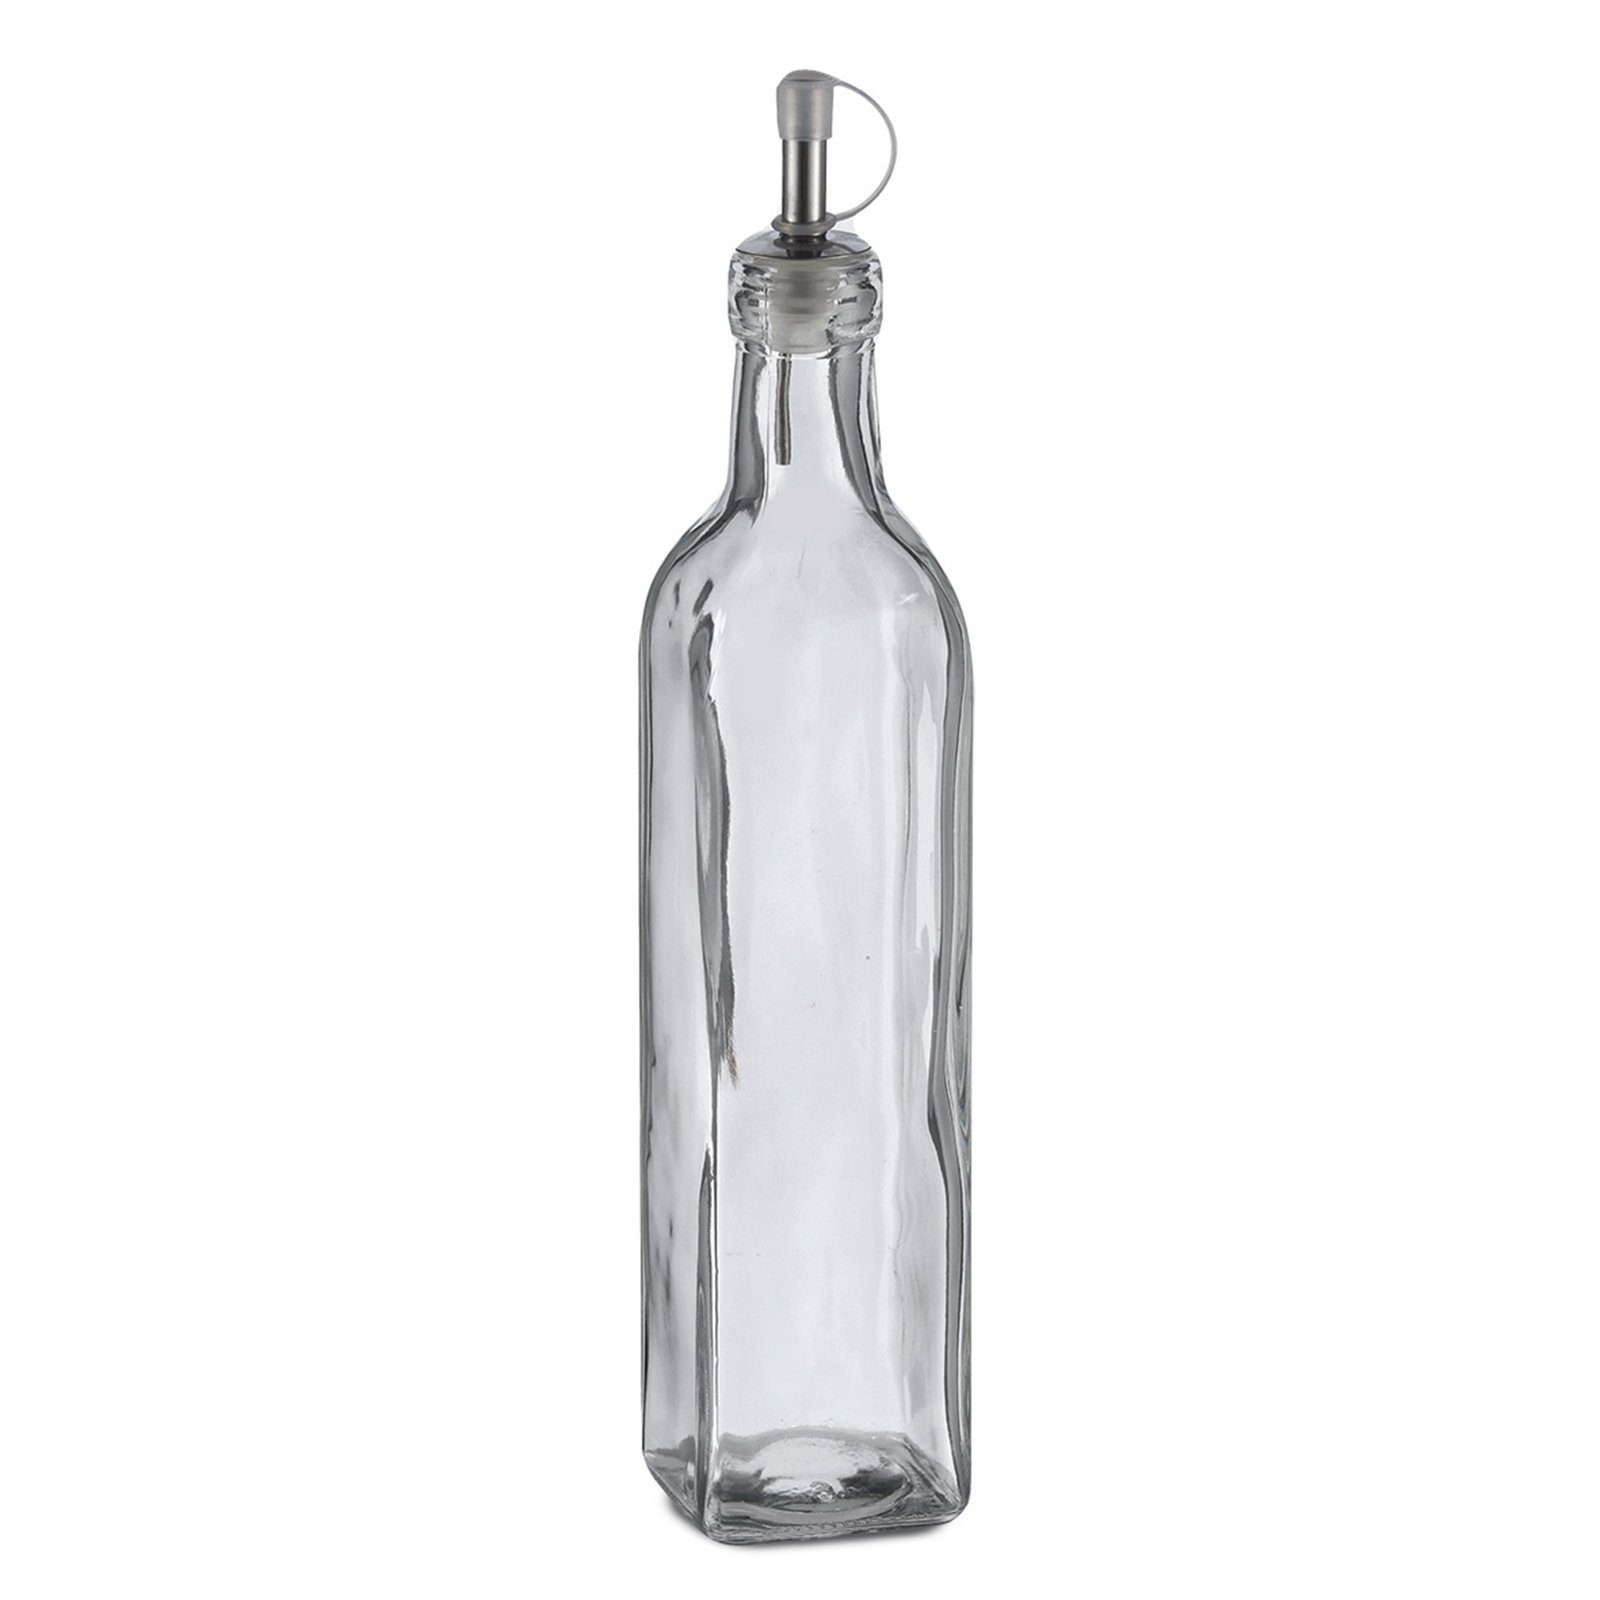 Zeller Present Ölspender Essig- oder Ölflasche Glas 500 ml, (Stück, 1-tlg), Zeller Present Essig- oder Ölflasche Glas 500 ml